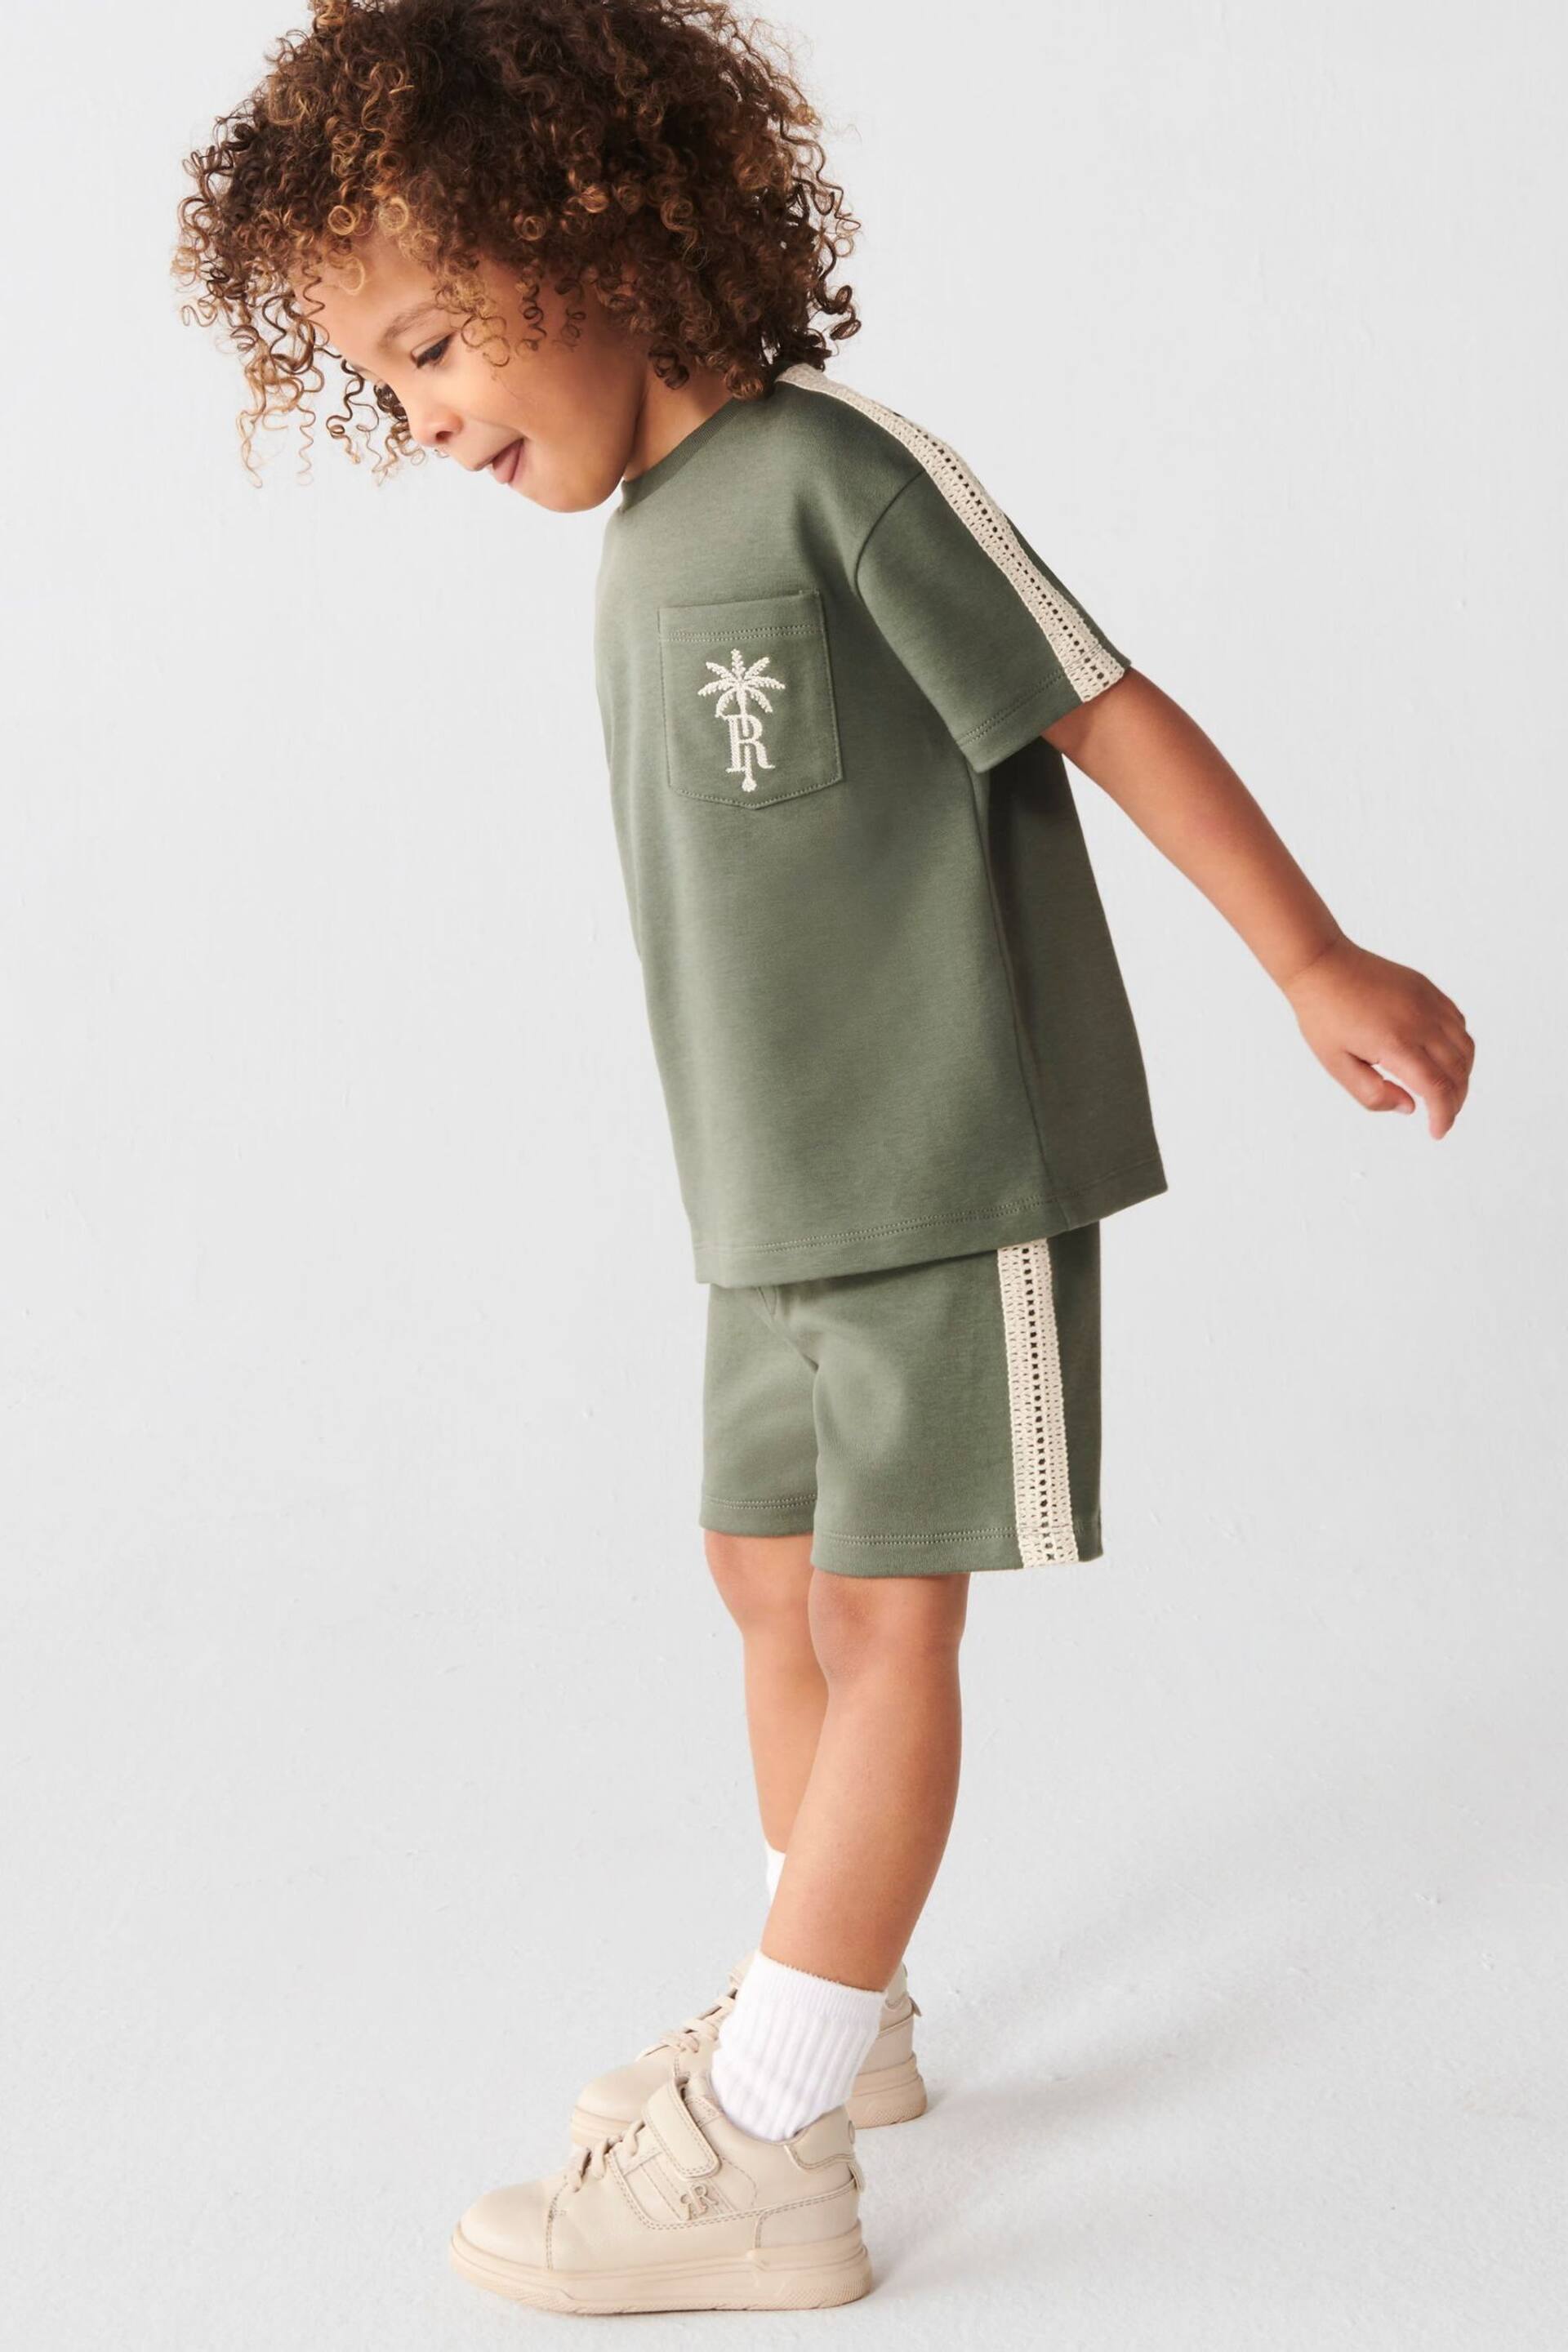 River Island Green Boys Crochet Tape T-Shirt Set - Image 3 of 4